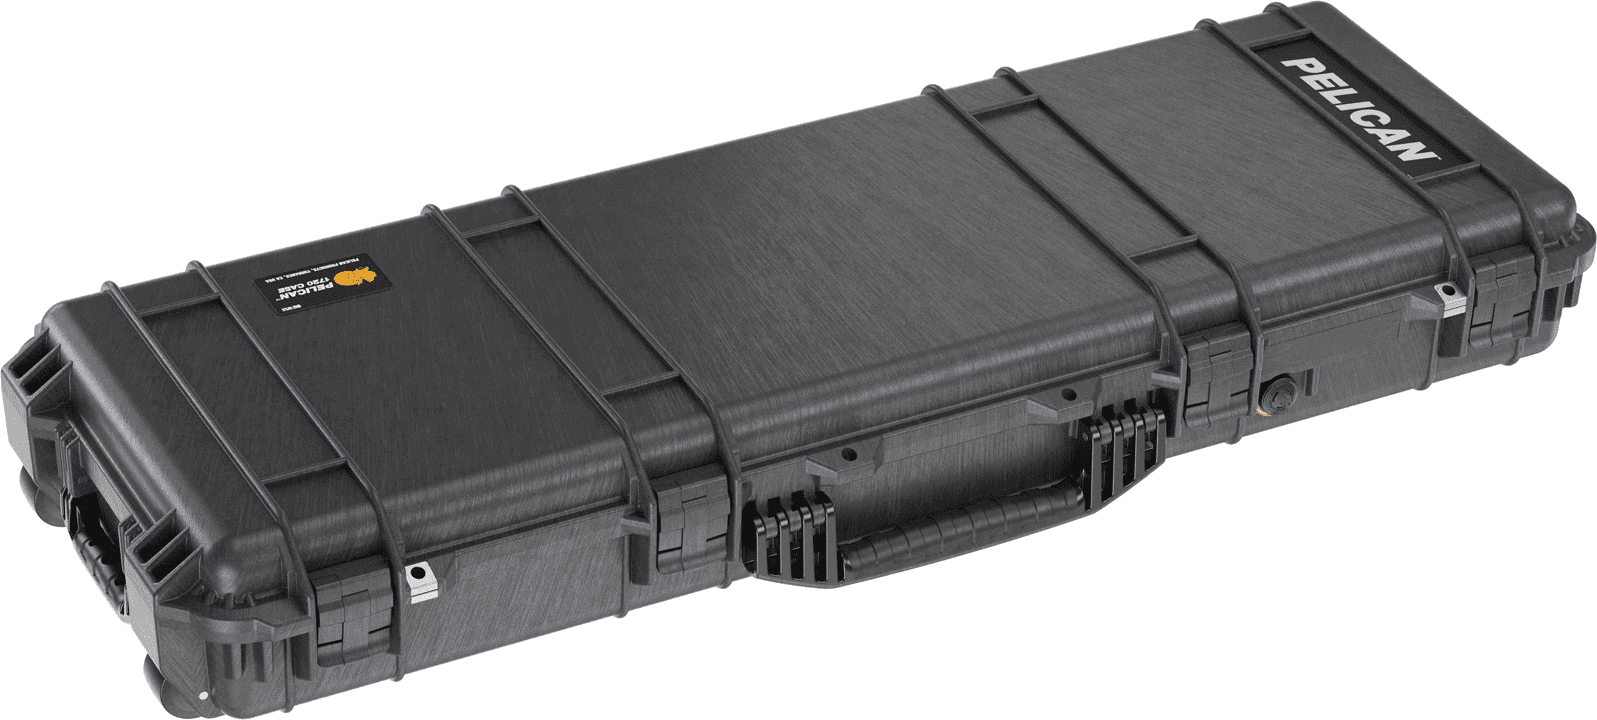 Pelican Products 1720 Protector Long Case - Black, Foam